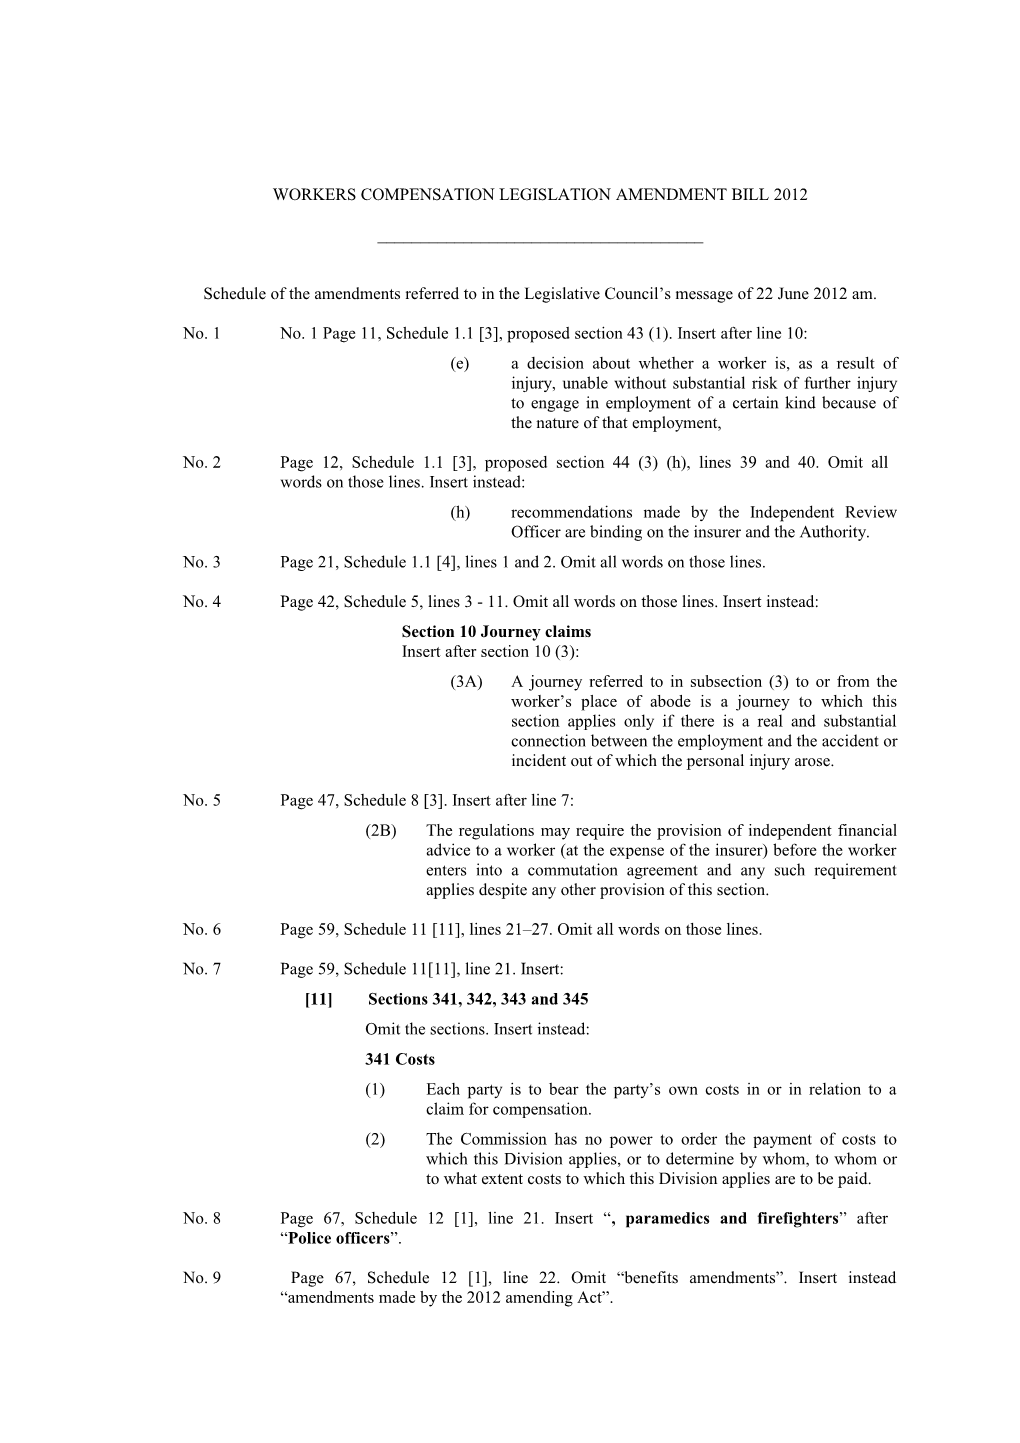 Schedule - Workers Compensation Legislation Amendment Bill 2012